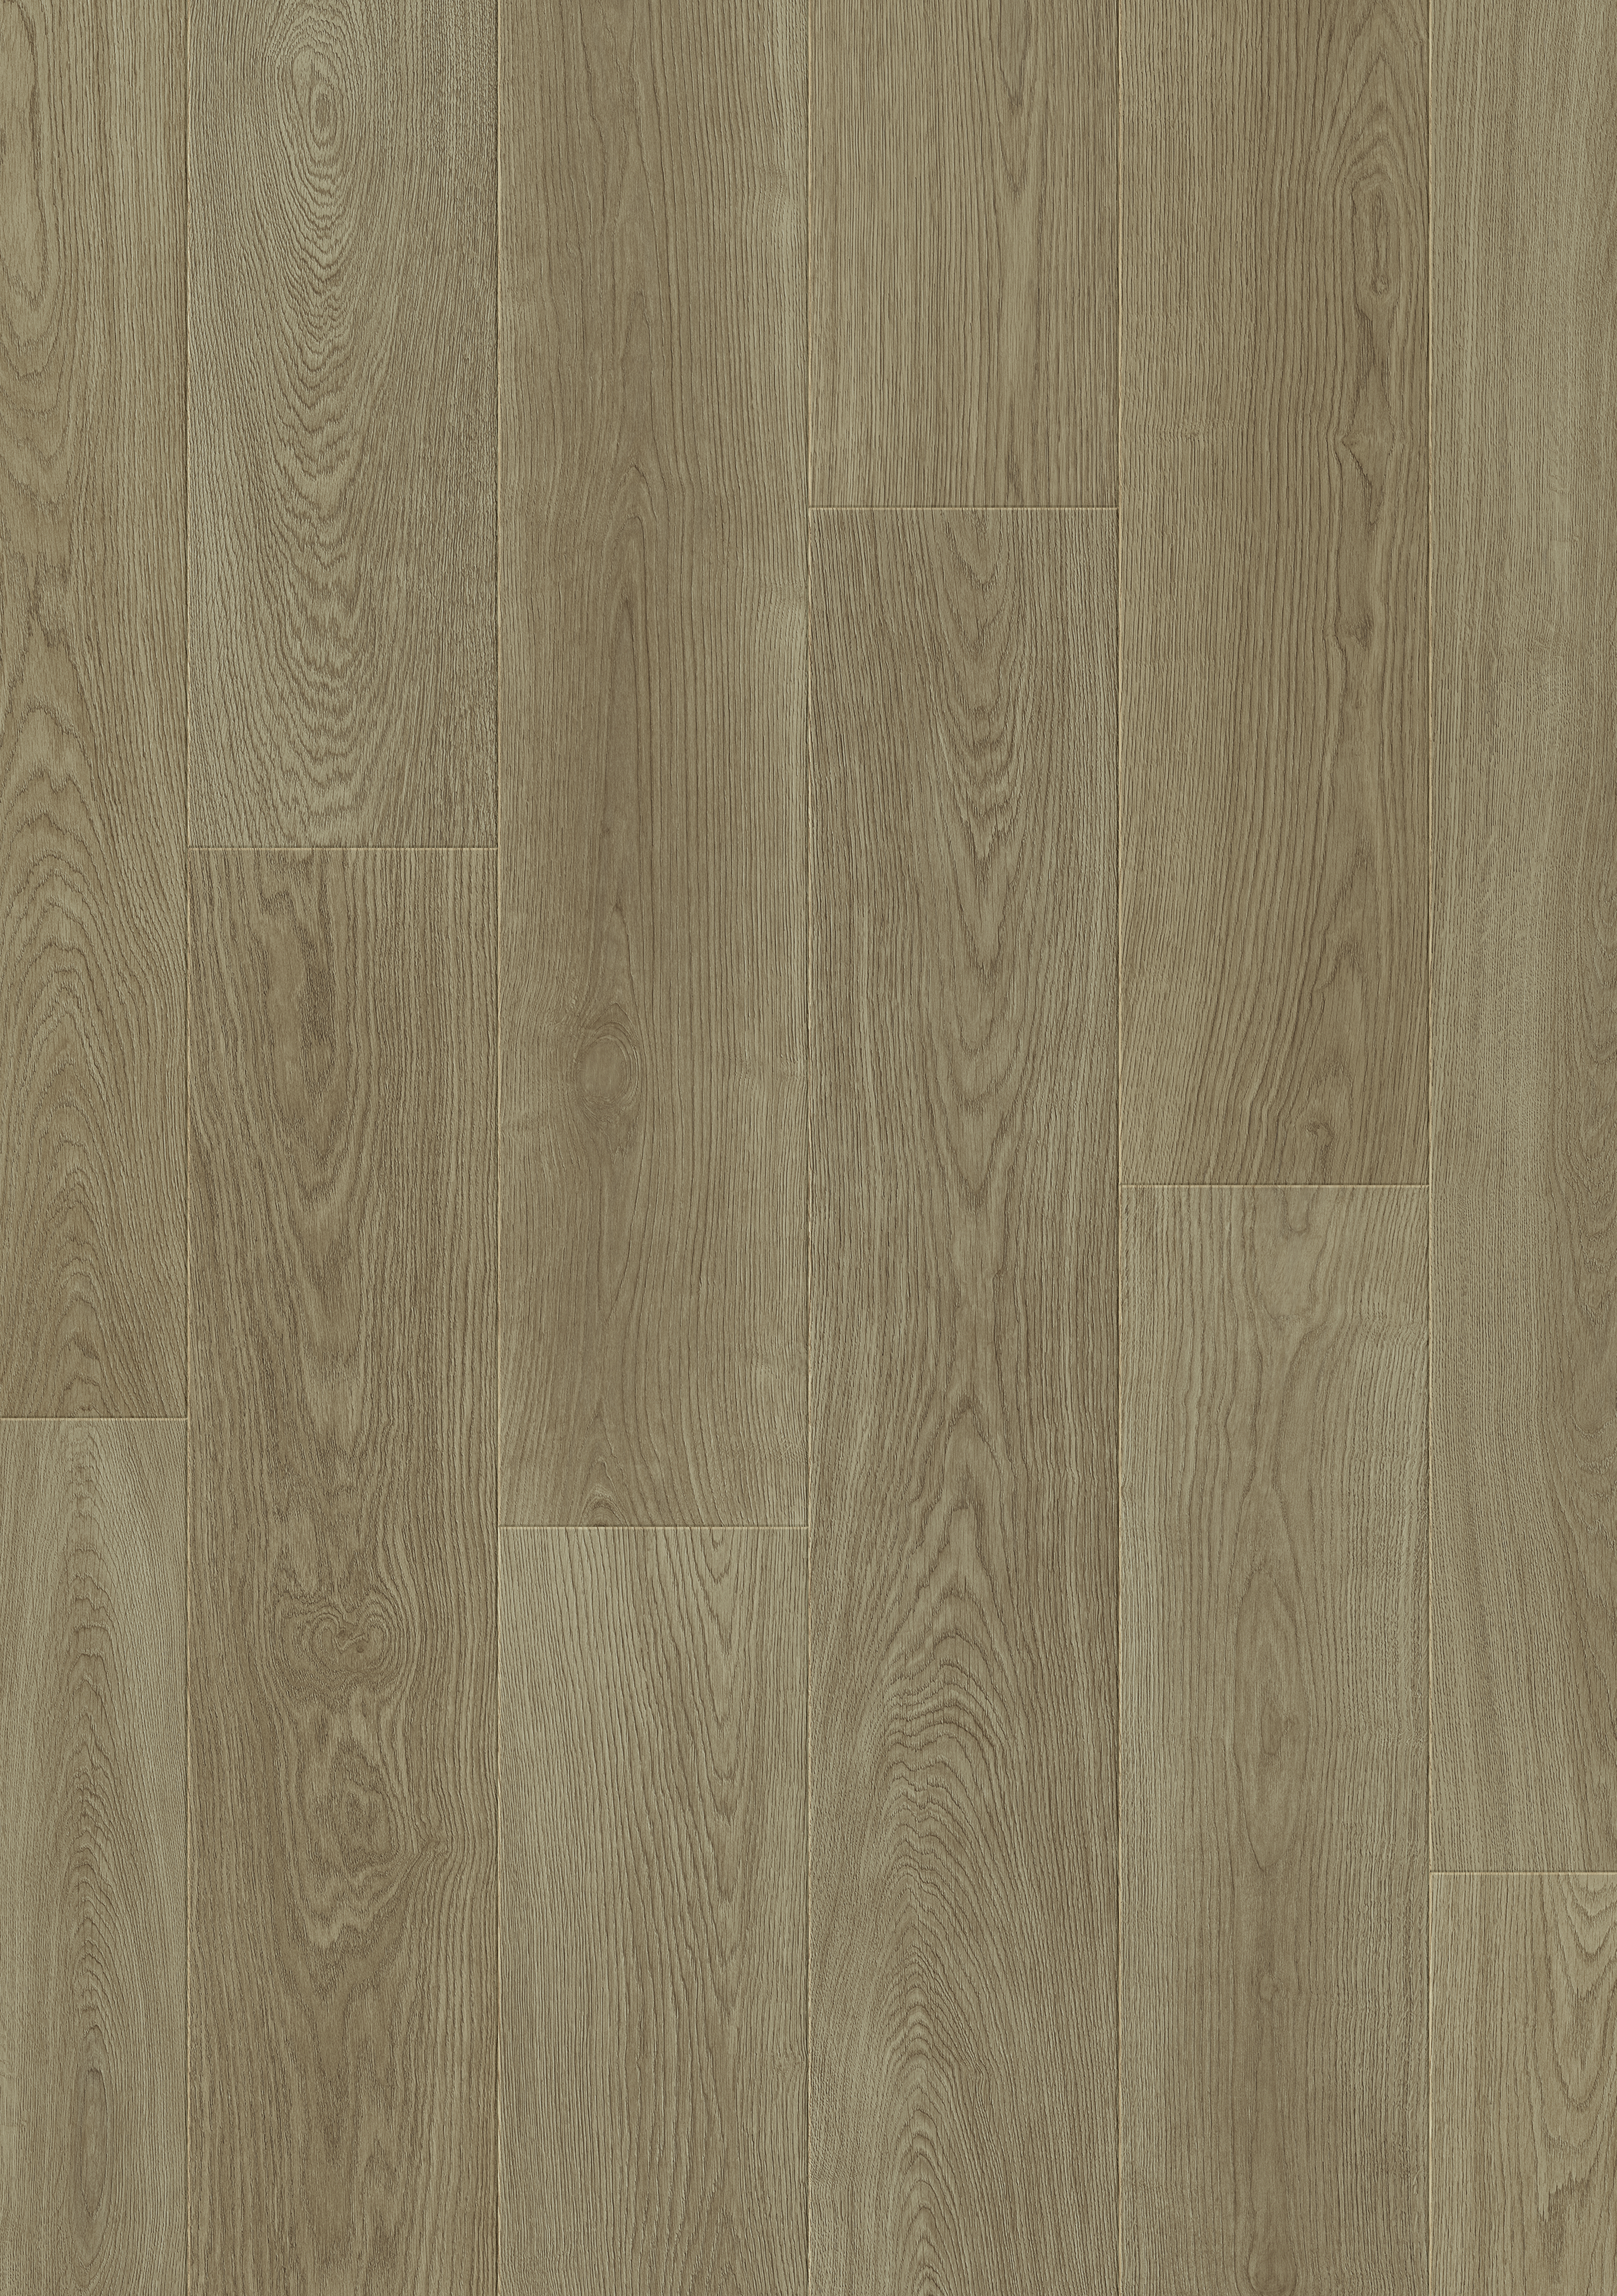 Image of Quick-Step Salto Finn Medium Oak 8mm Water Resistant Laminate Flooring - 2.179m2